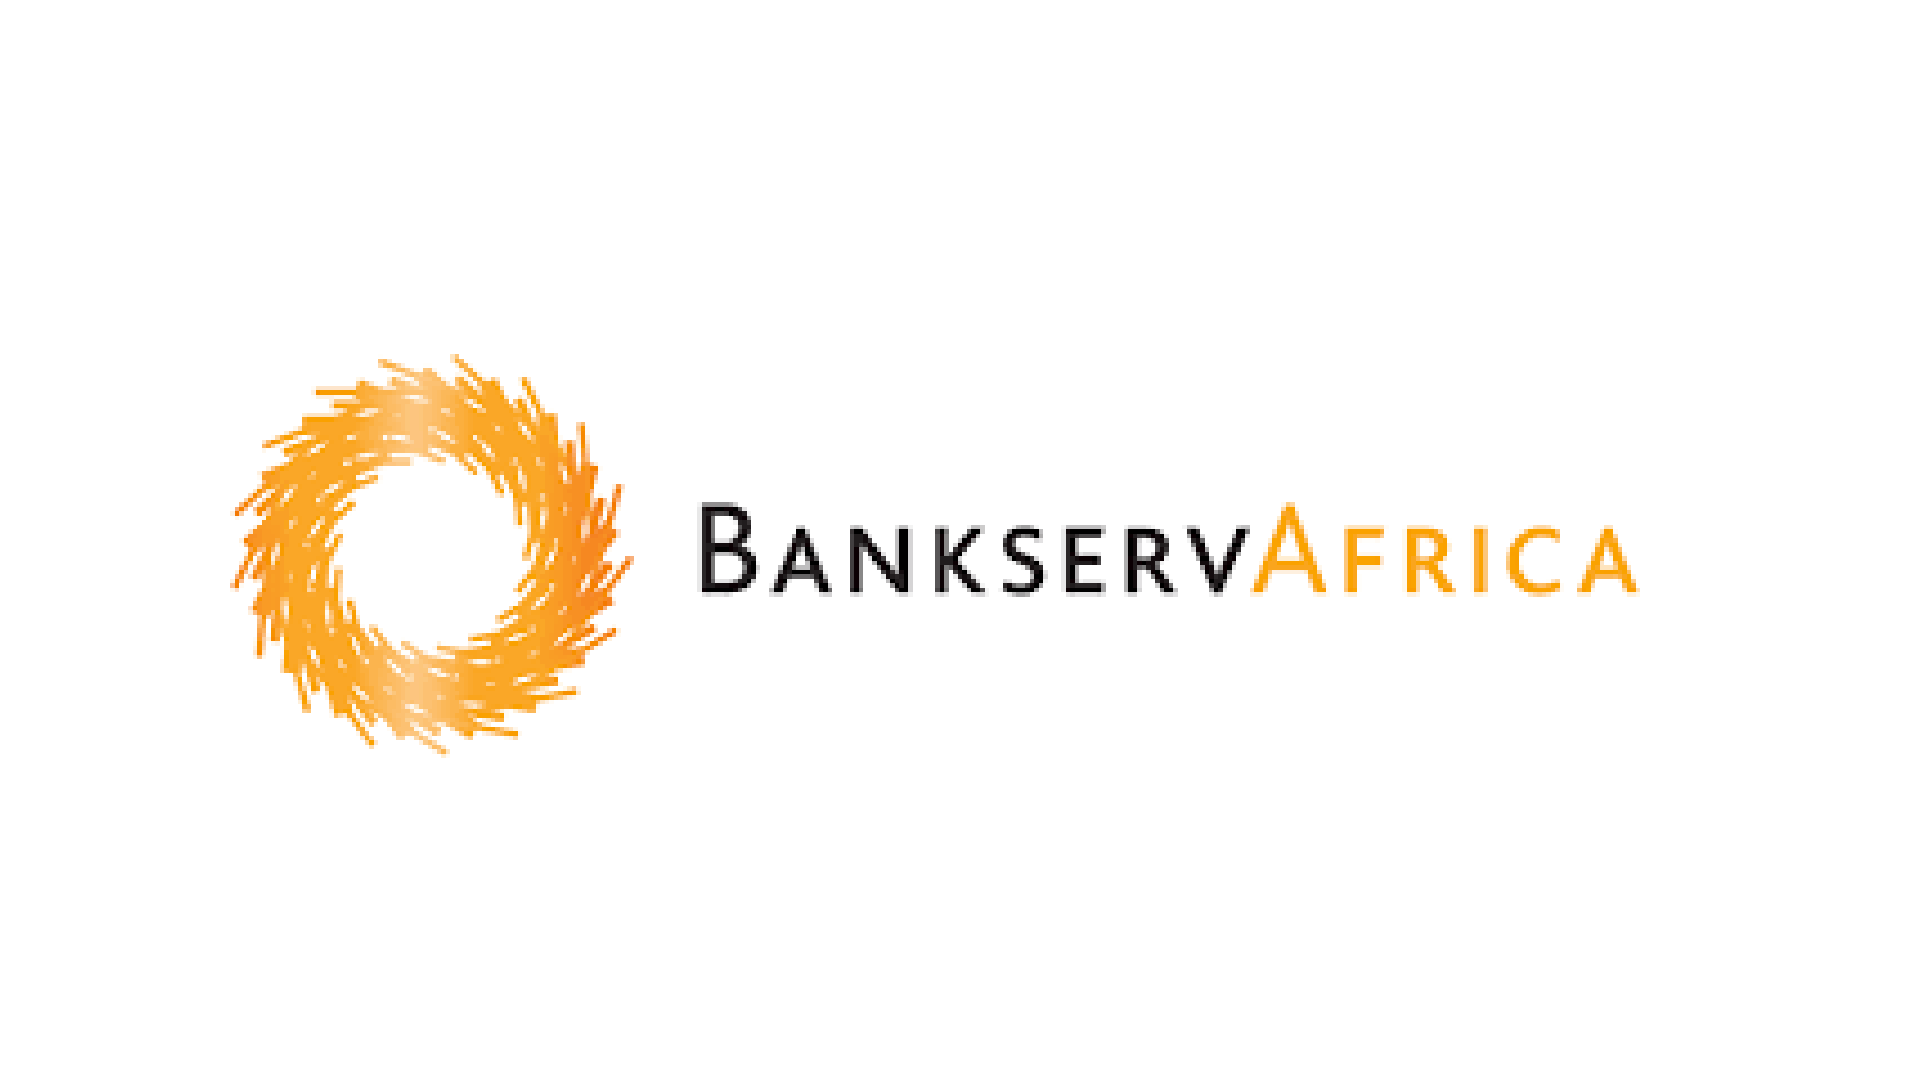 Bankserv Africa